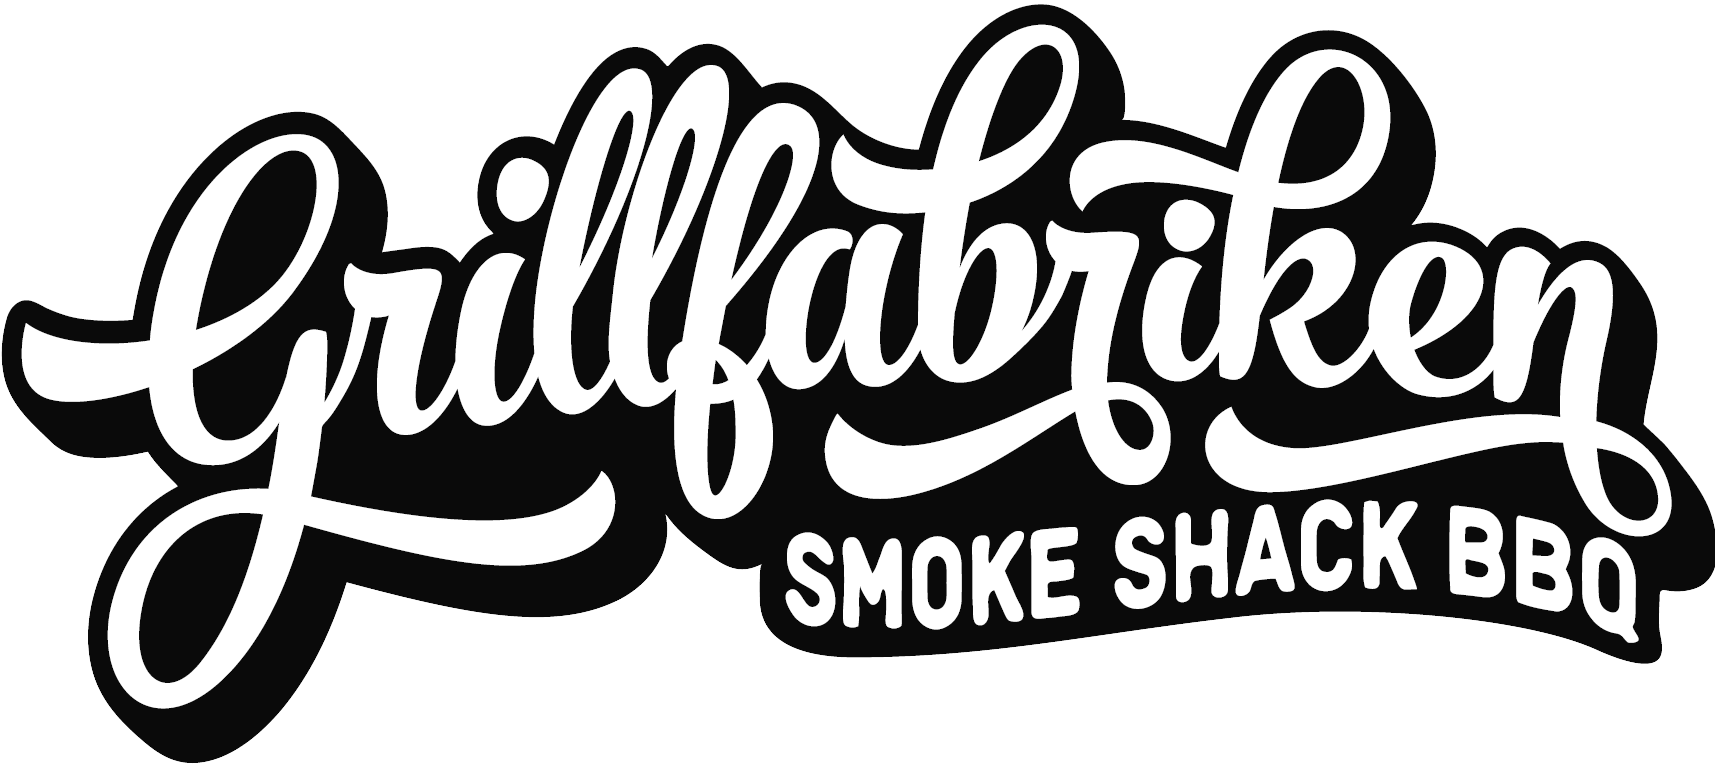 grillfabriken SMOKE SHACK BBQ